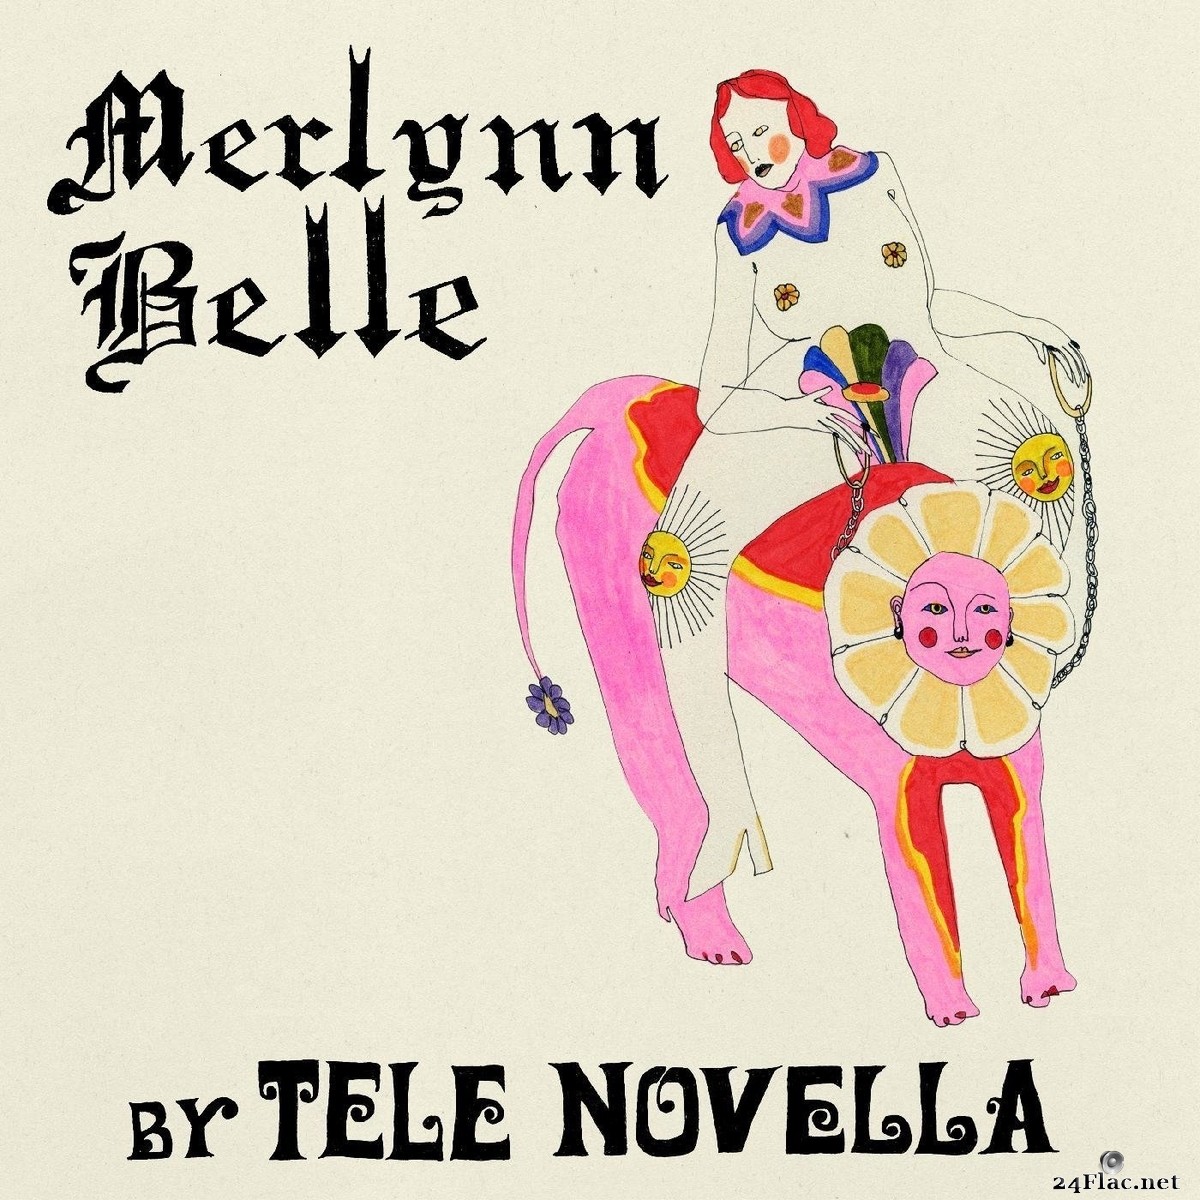 Tele Novella - Merlynn Belle (2021) FLAC